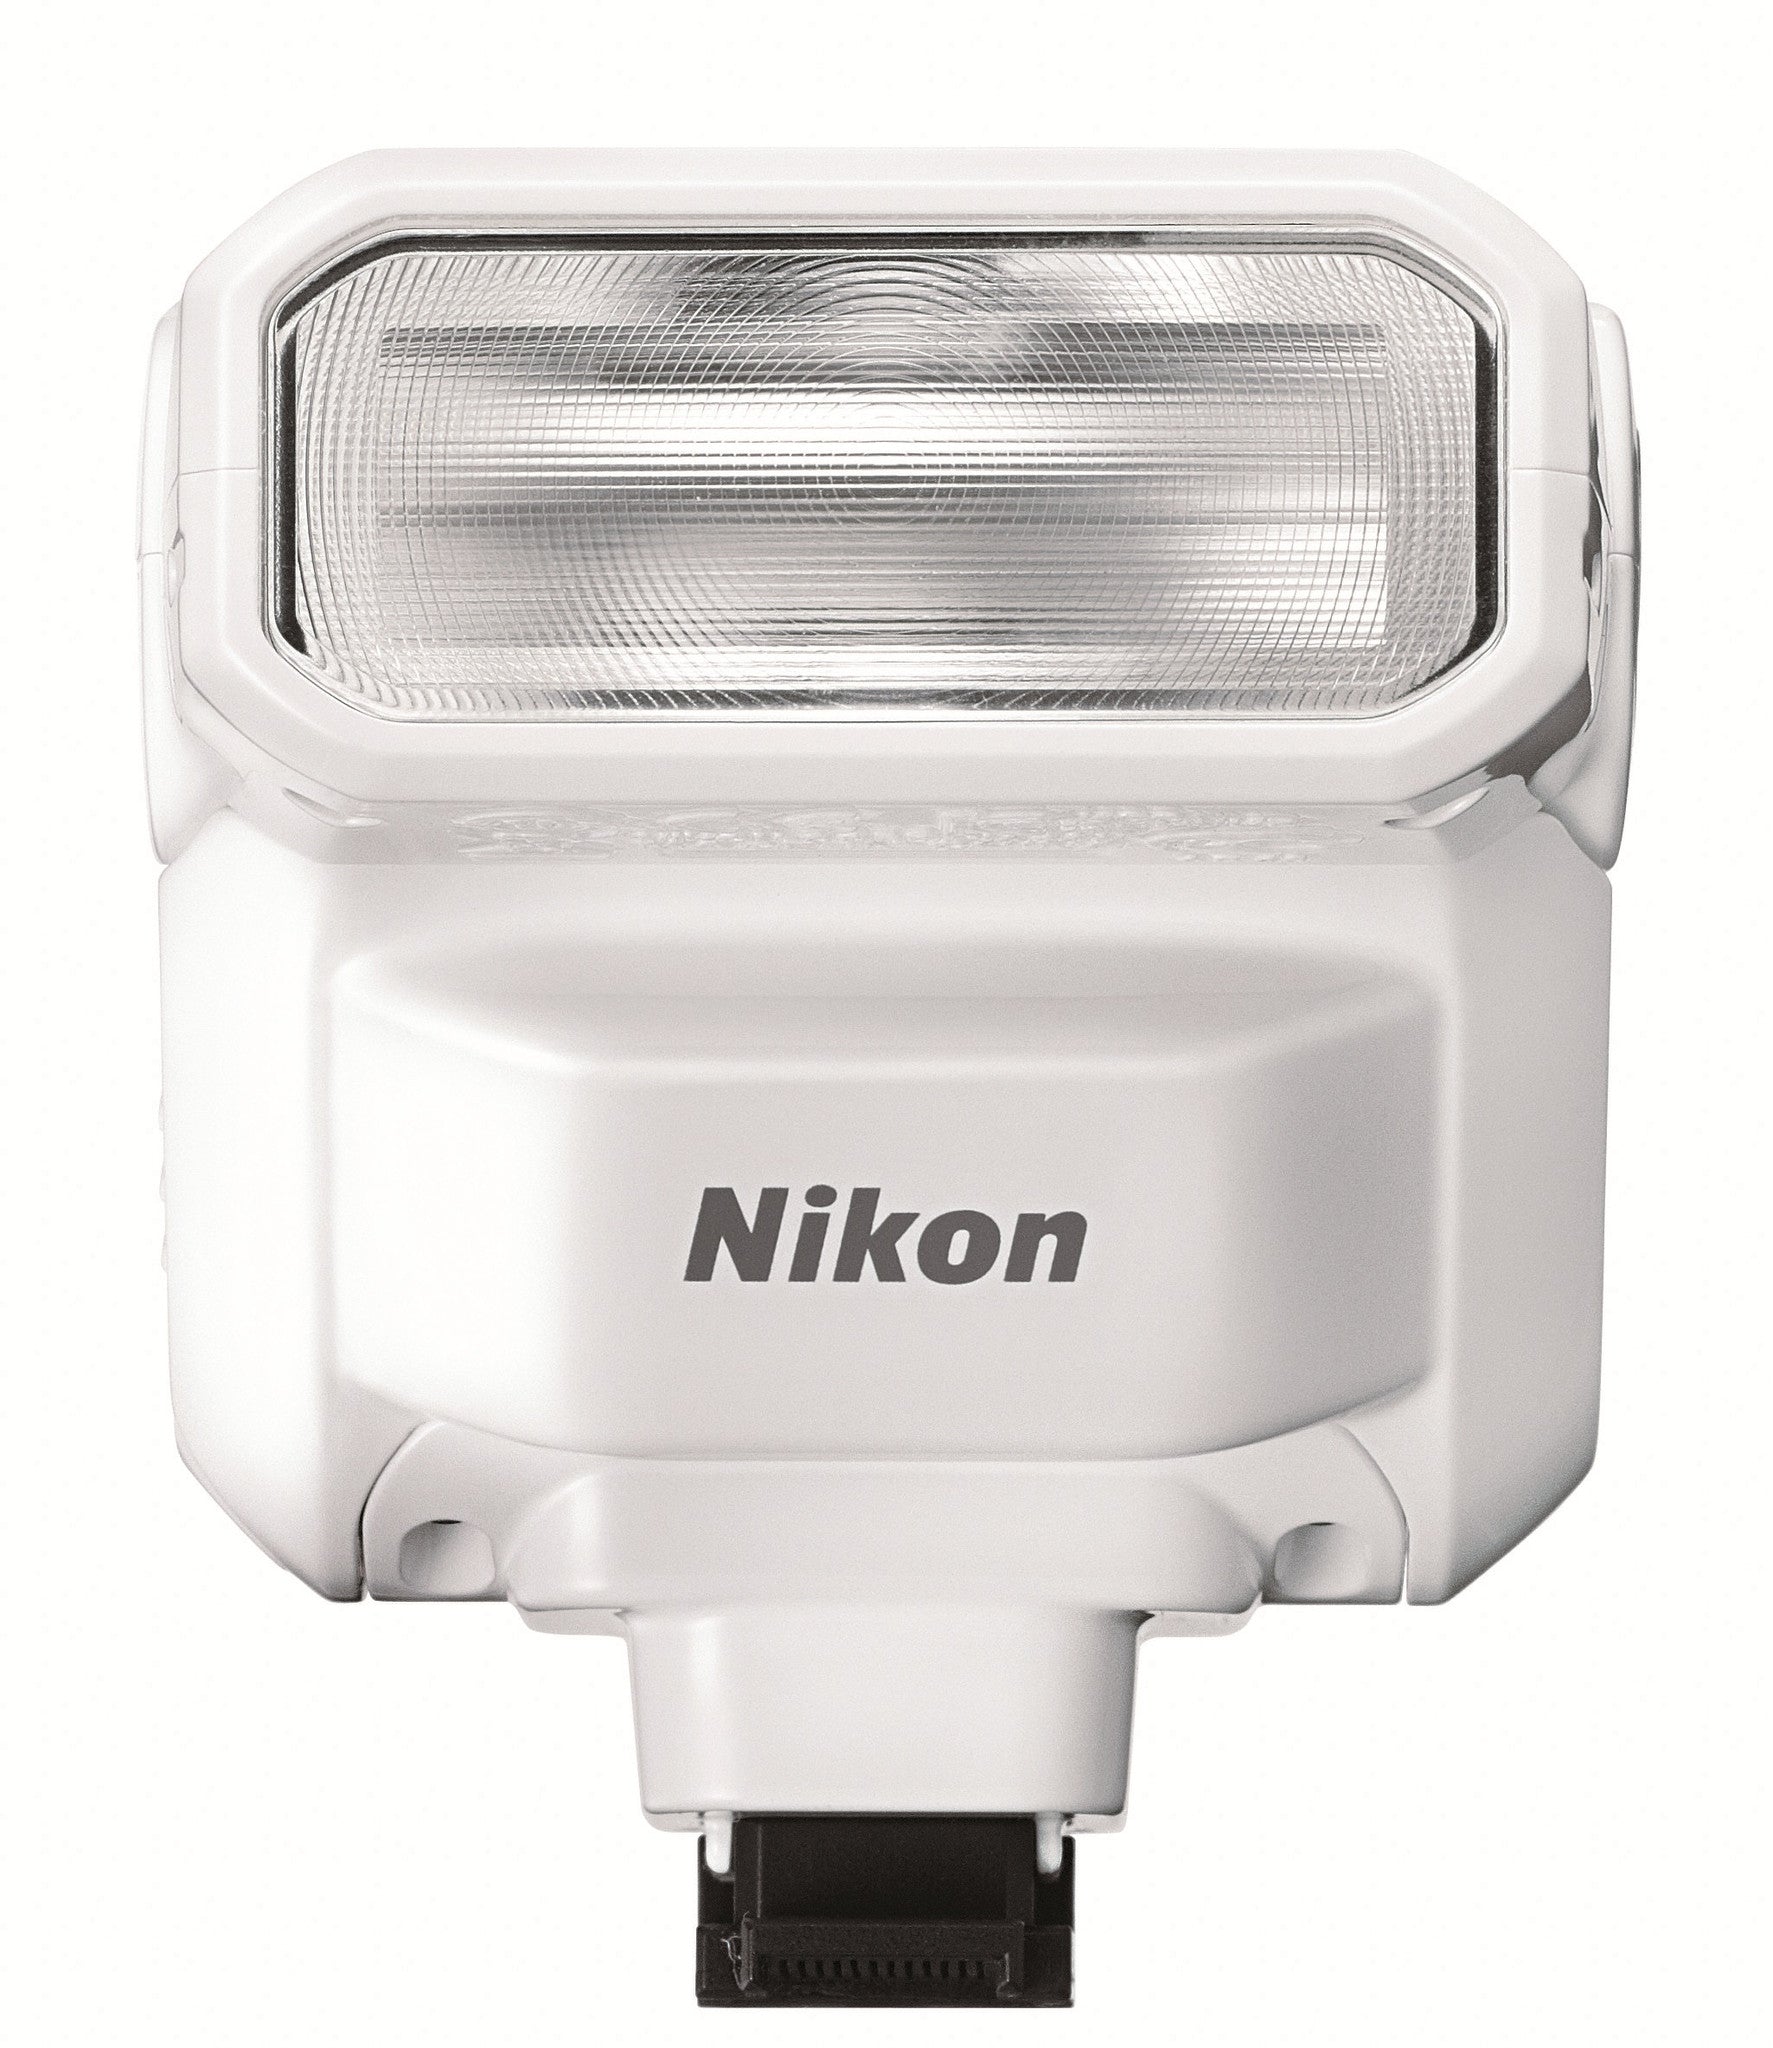 Nikon SB-N7 Speedlight White, lighting hot shoe flashes, Nikon - Pictureline 